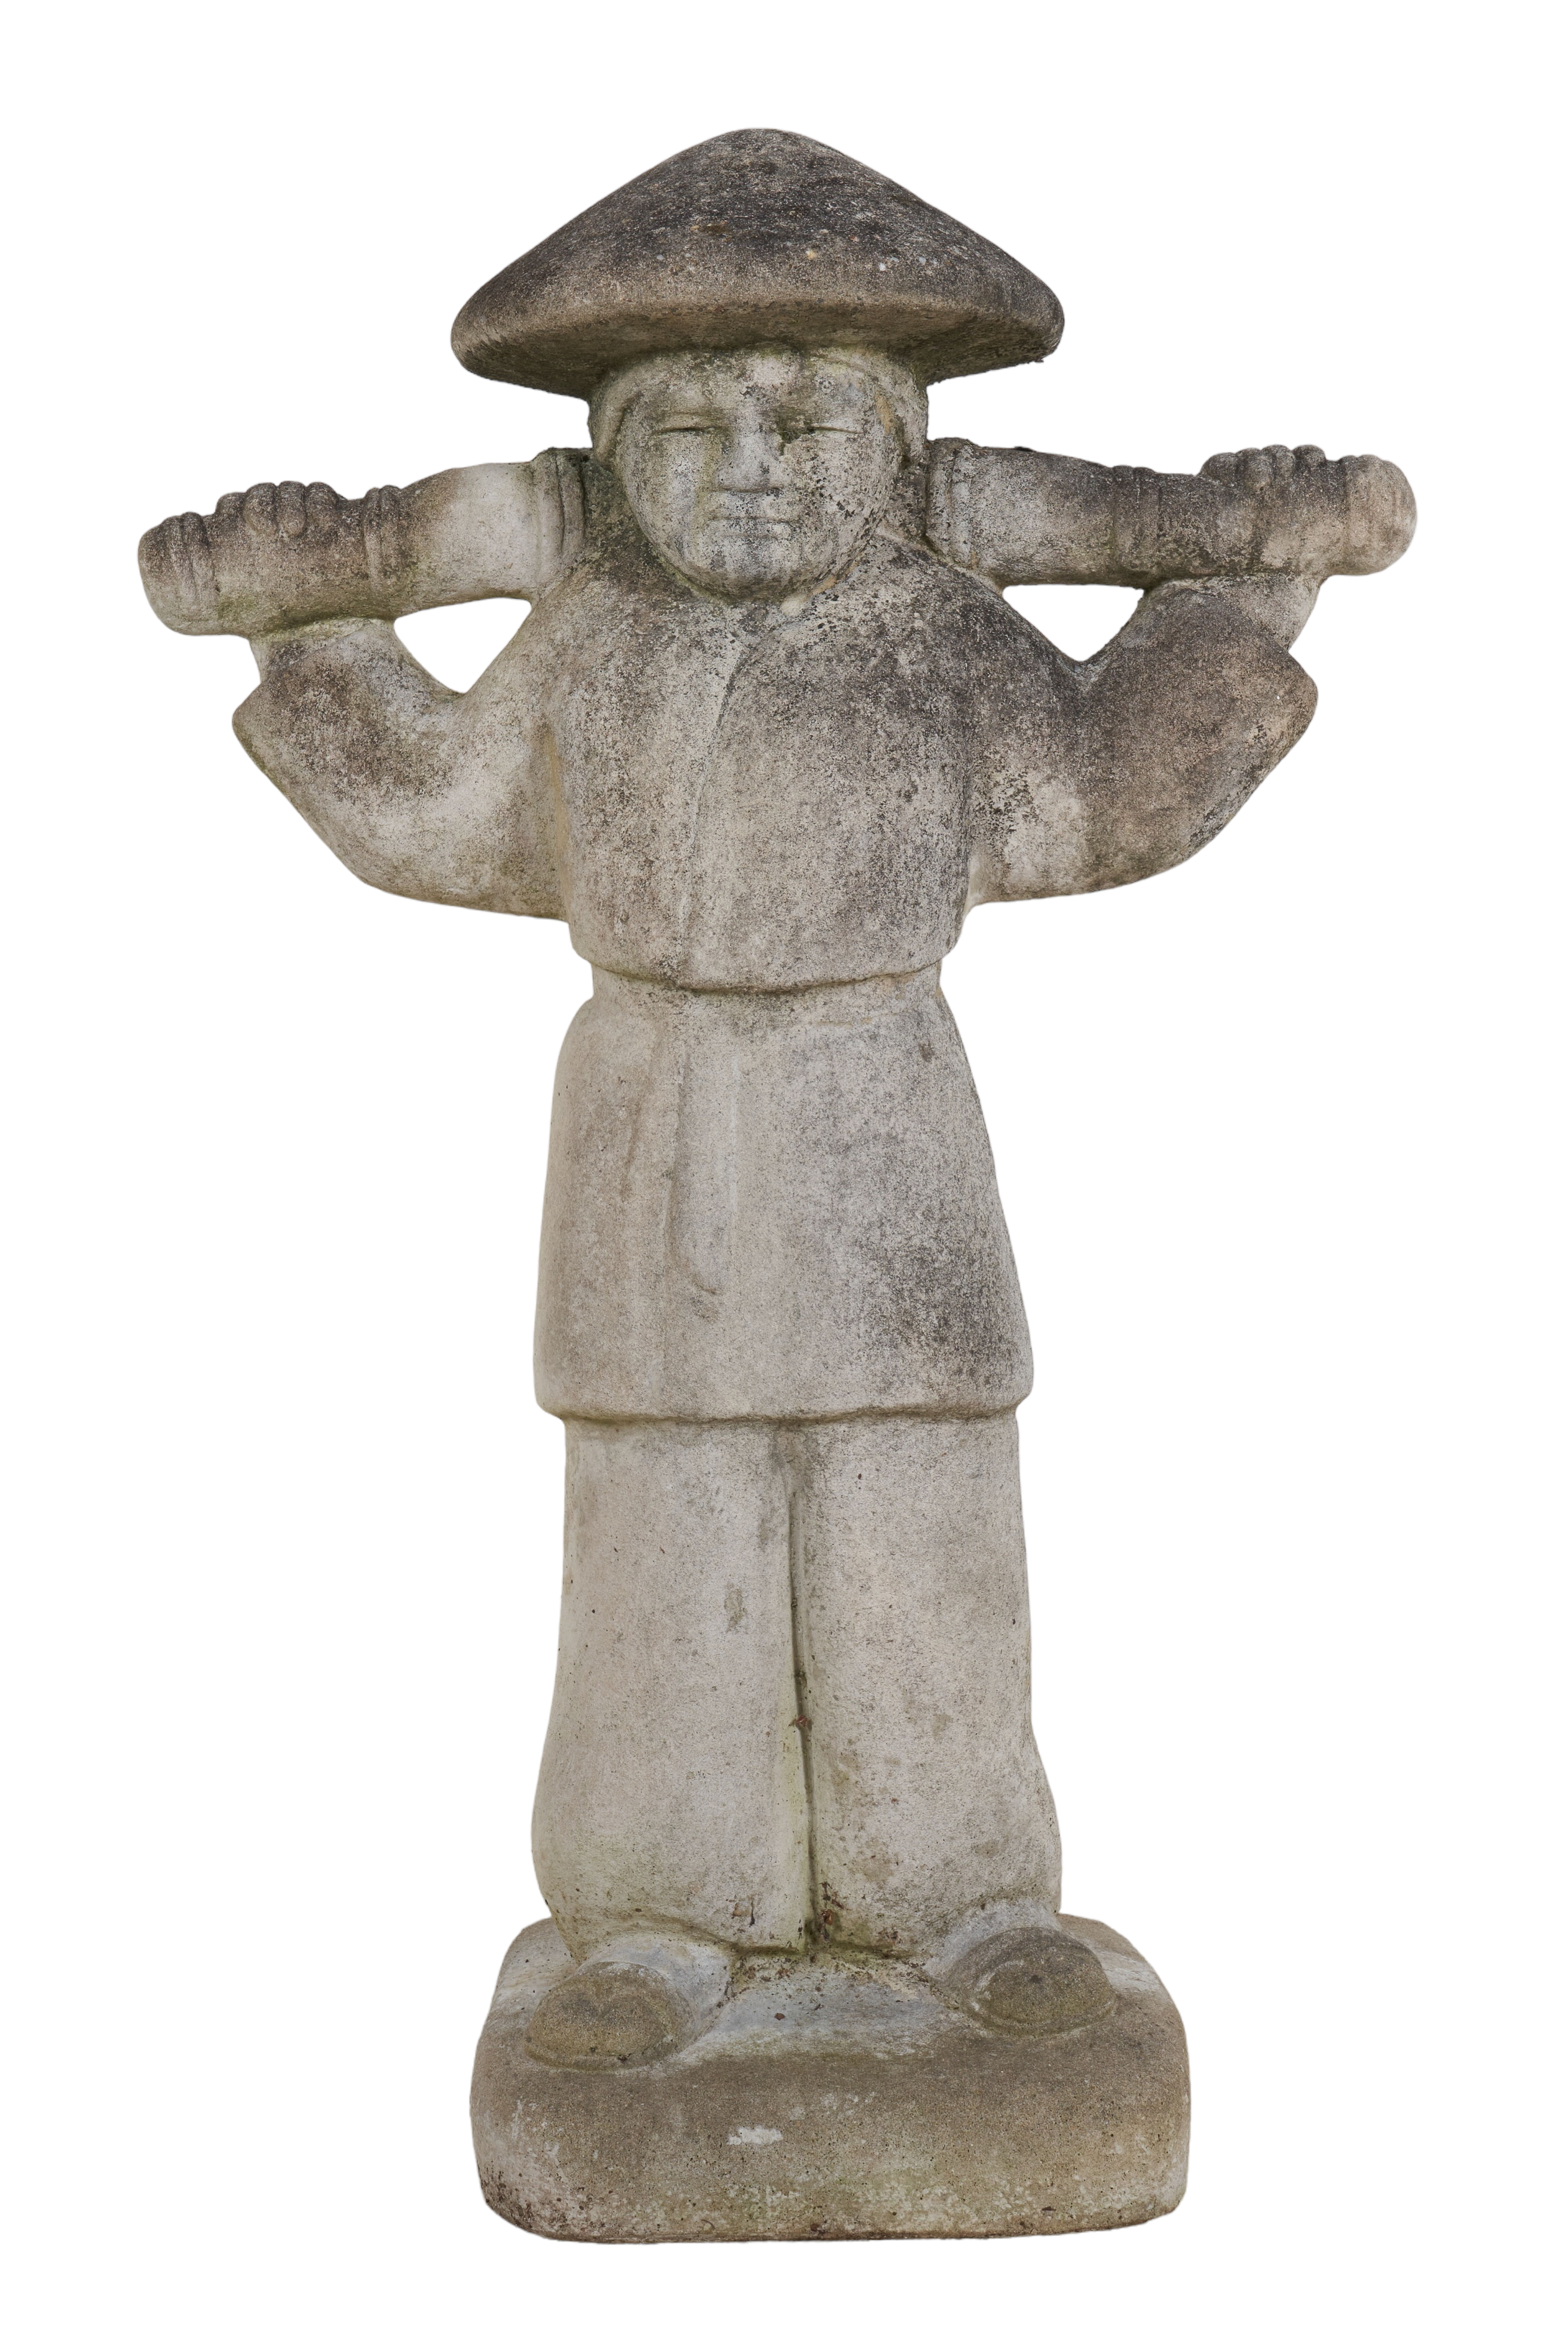 Cement statue of an Asian figure,